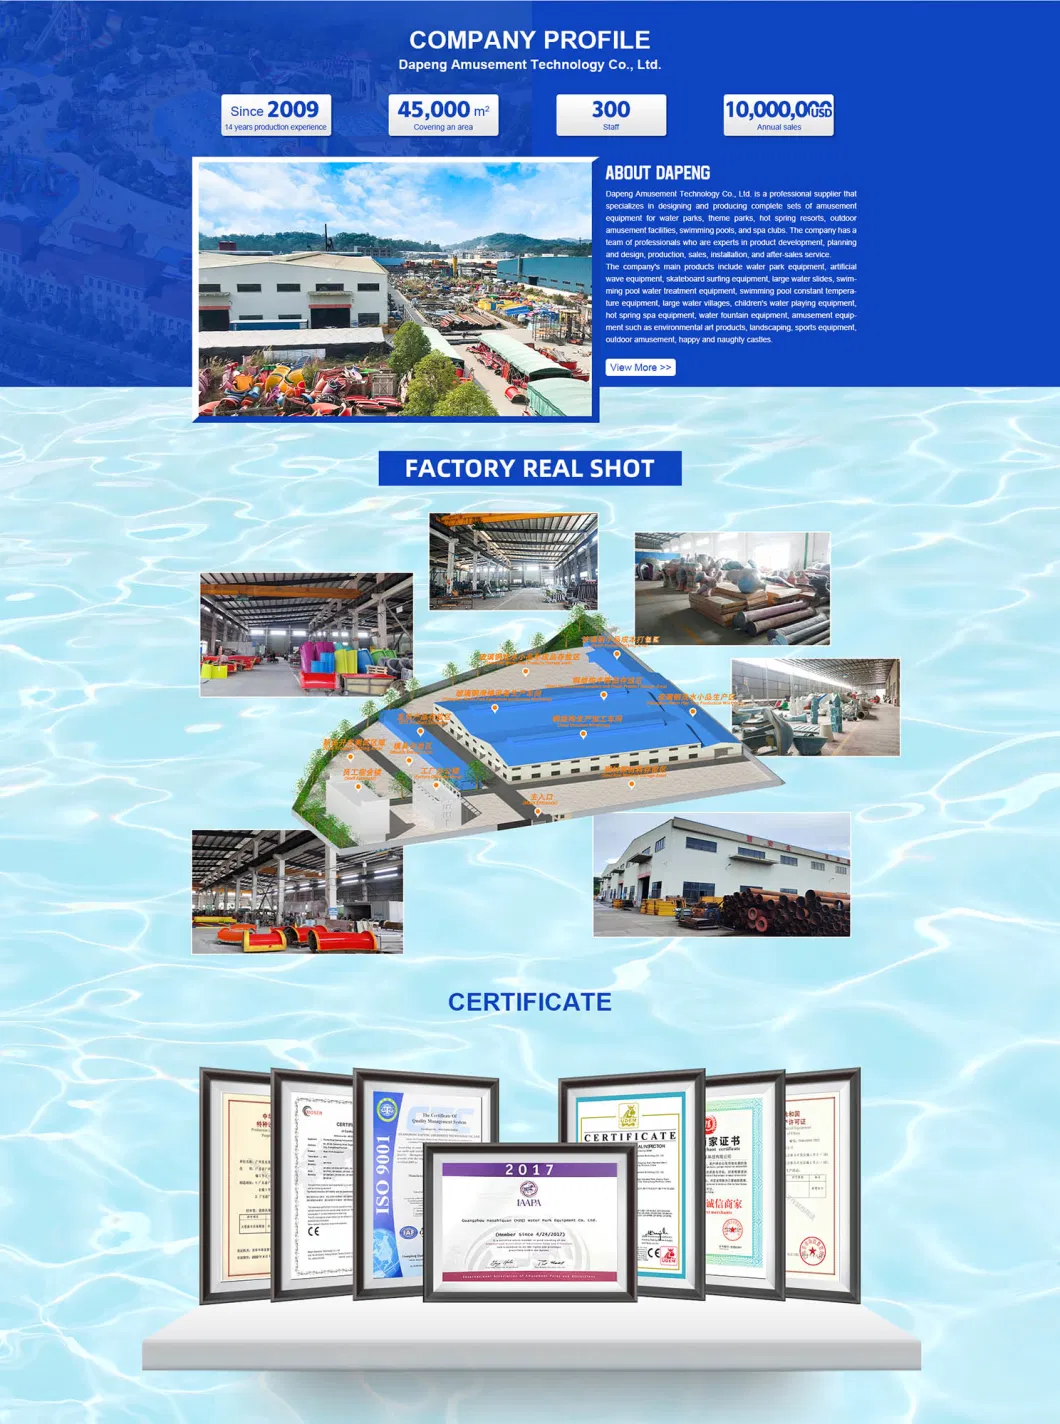 China Aqua Park Equipment Swimming Pool Seesaw for Kids